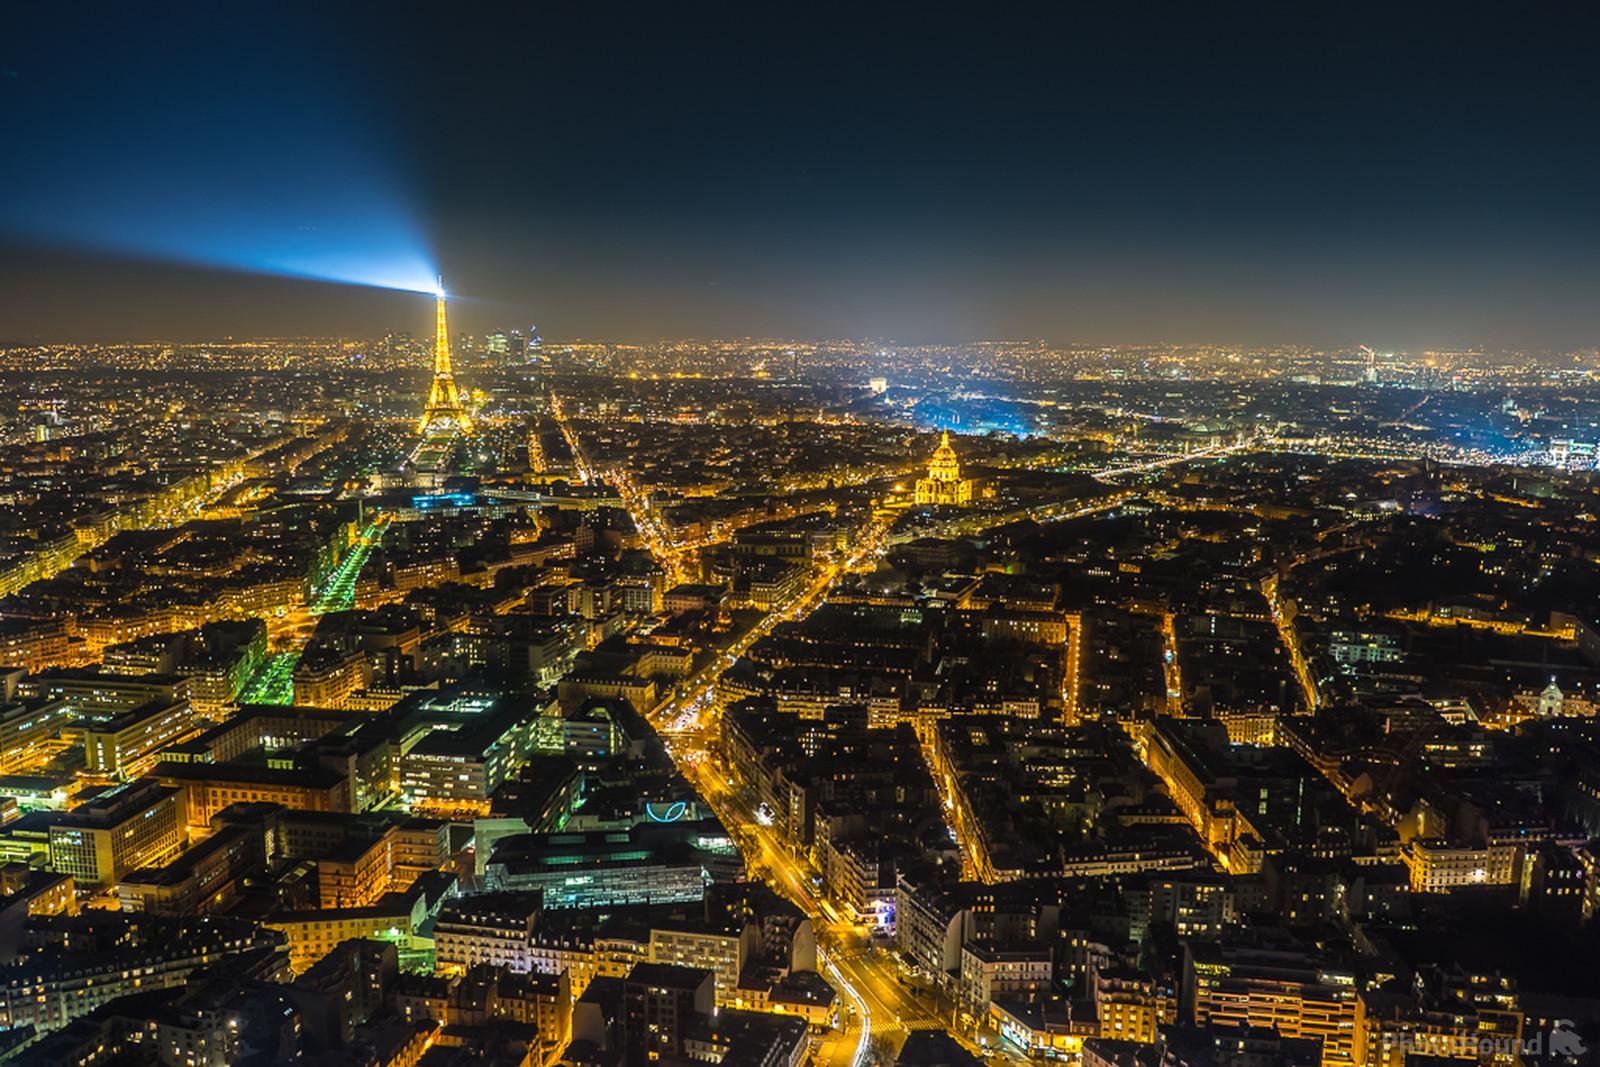 Image of Tour Montparnasse by James Billings.